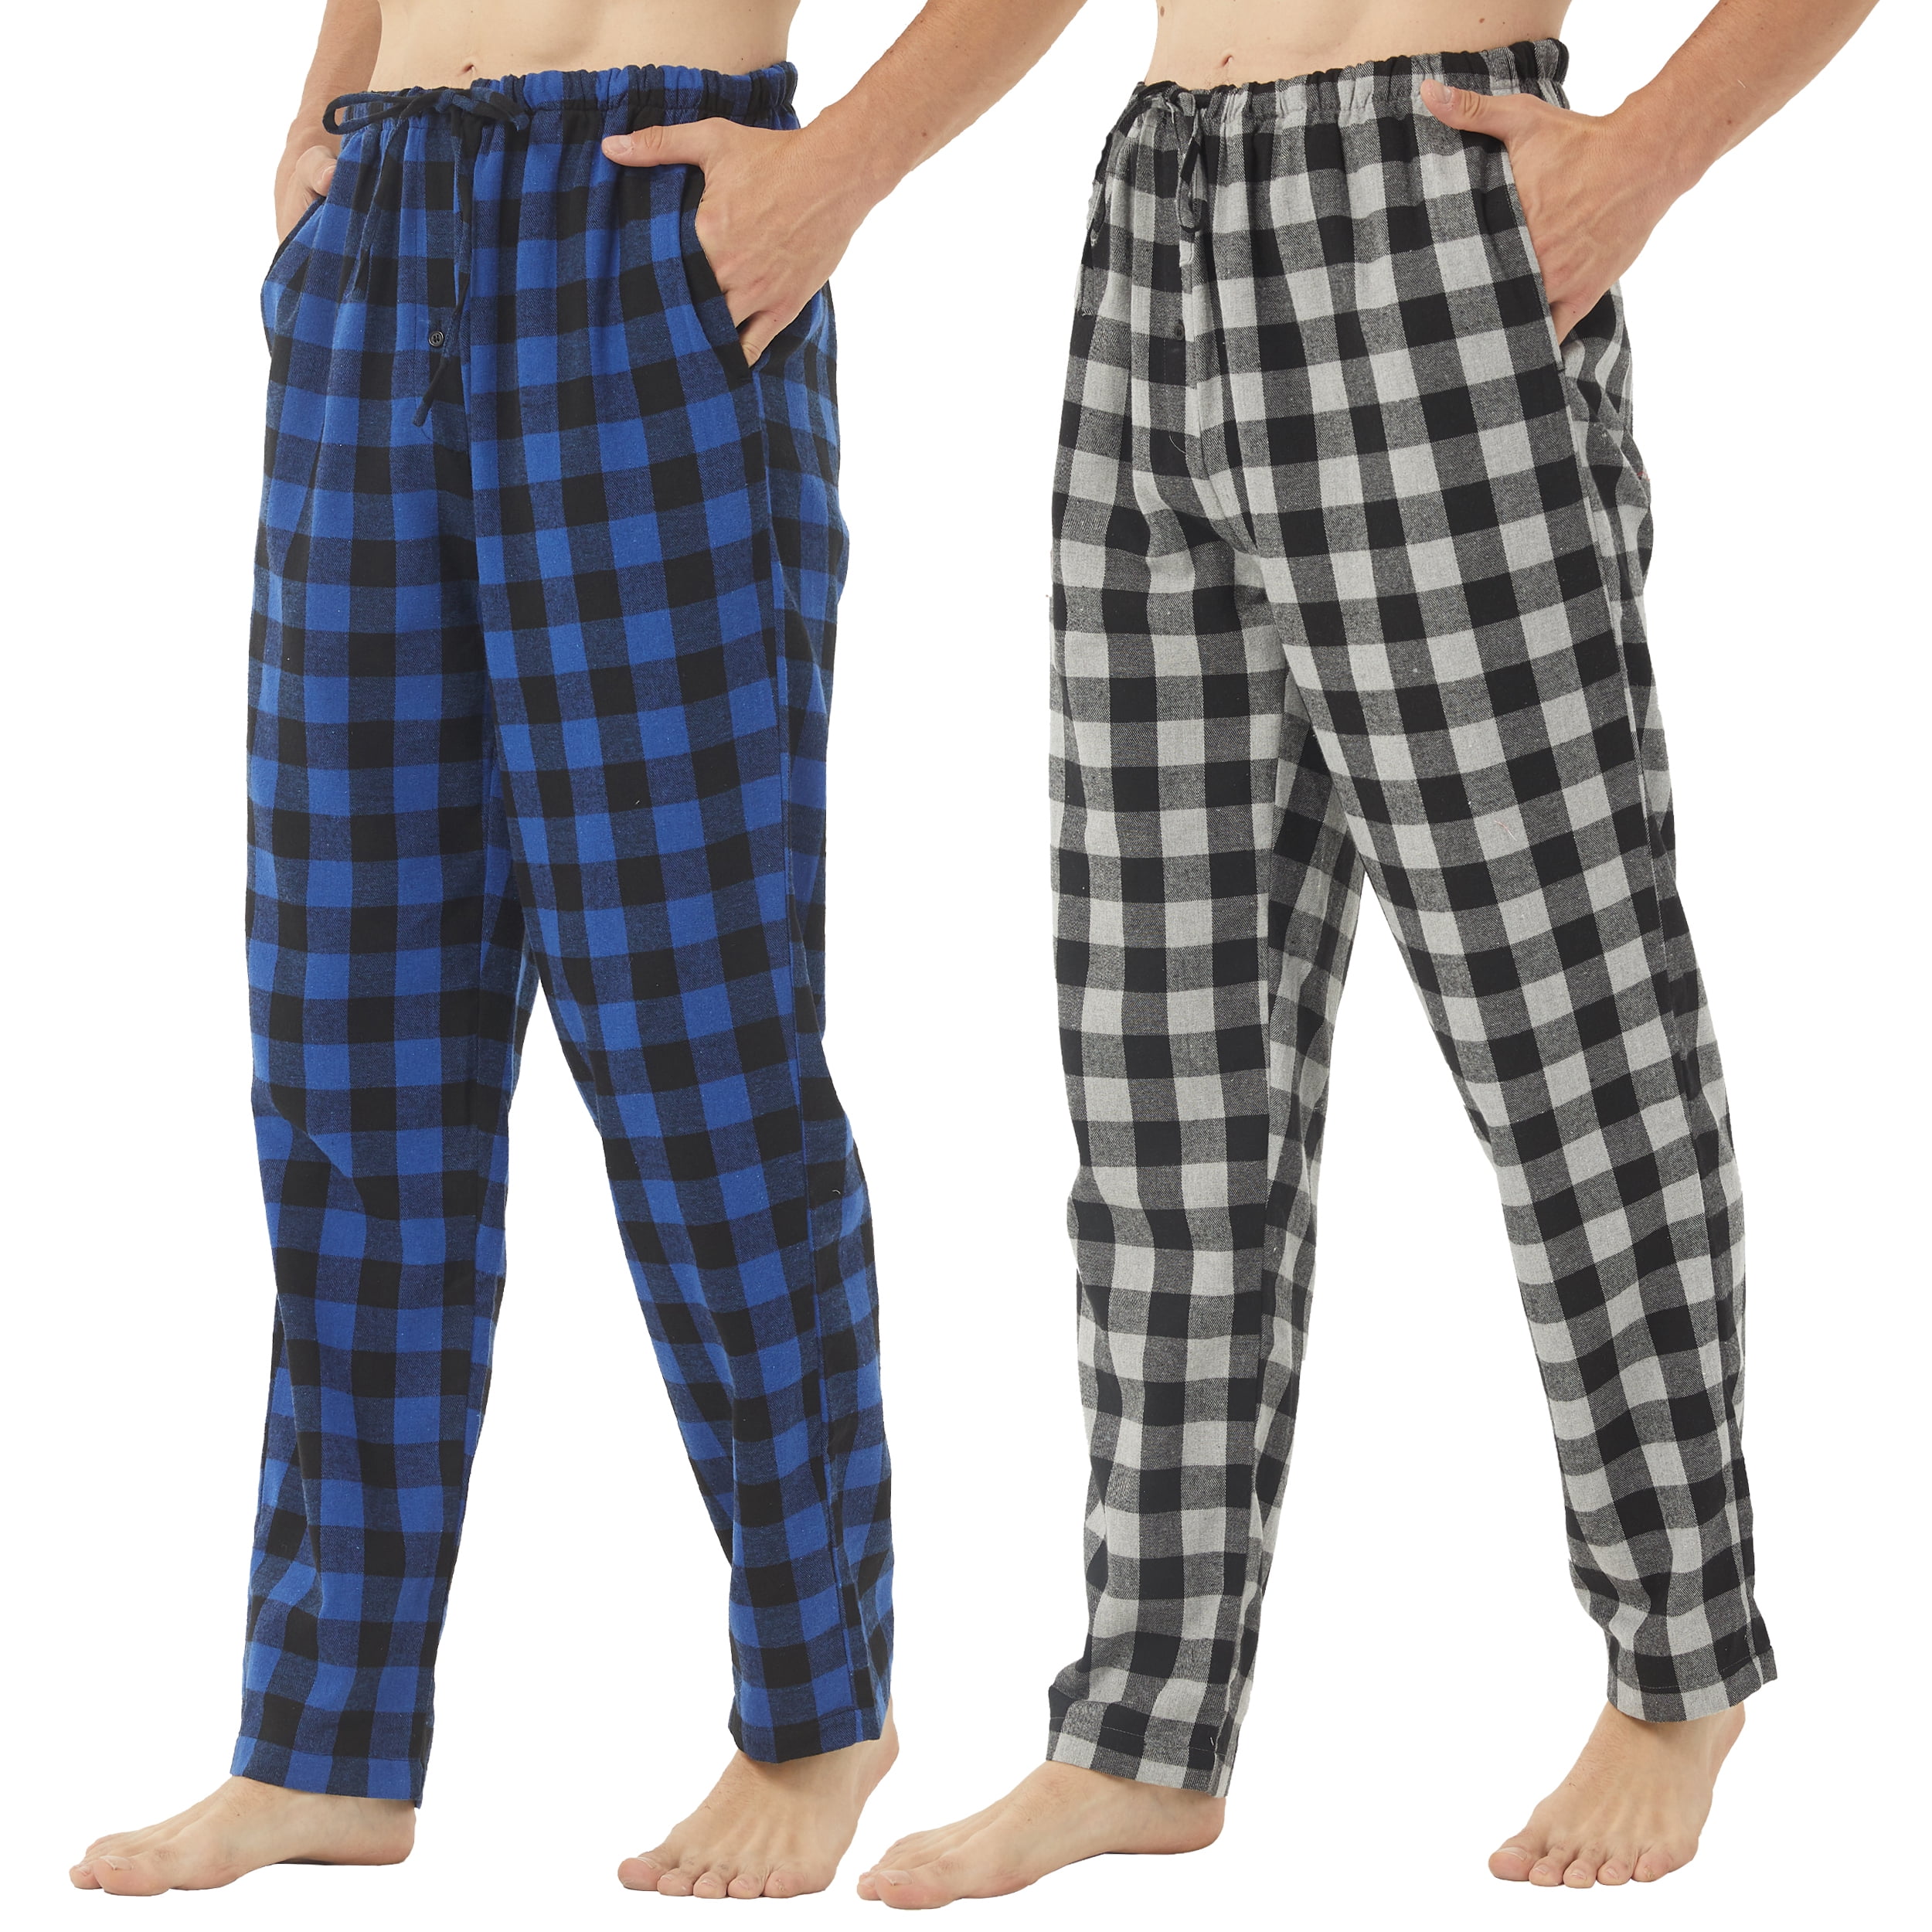 Mens Twin Pack Multi-Pack Pyjama Bottoms Trousers Pants Night Wear Comfortable 